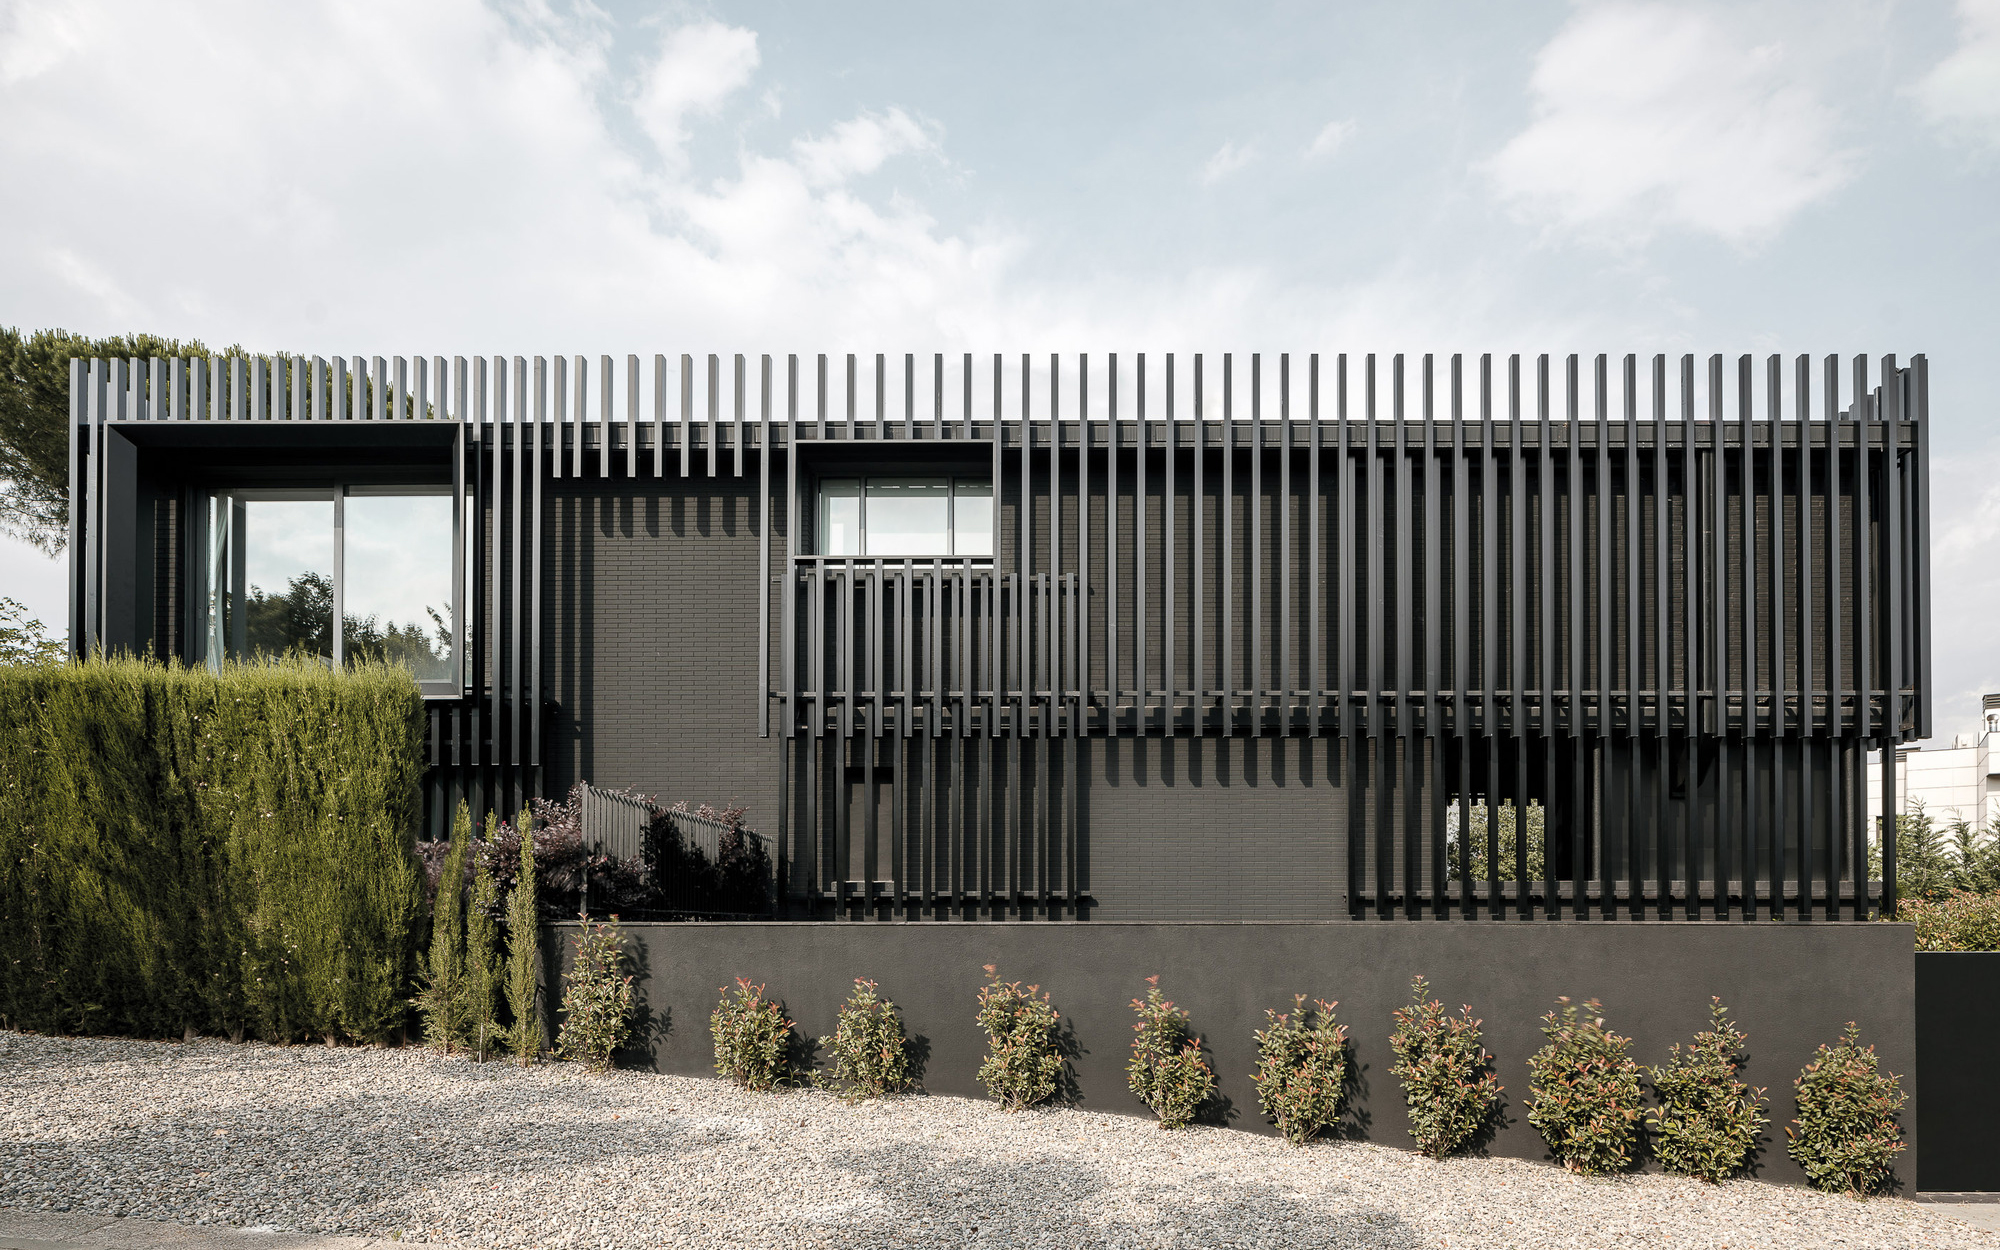 Black Brick House Designs That Are Awe-Inspiring - Gessato